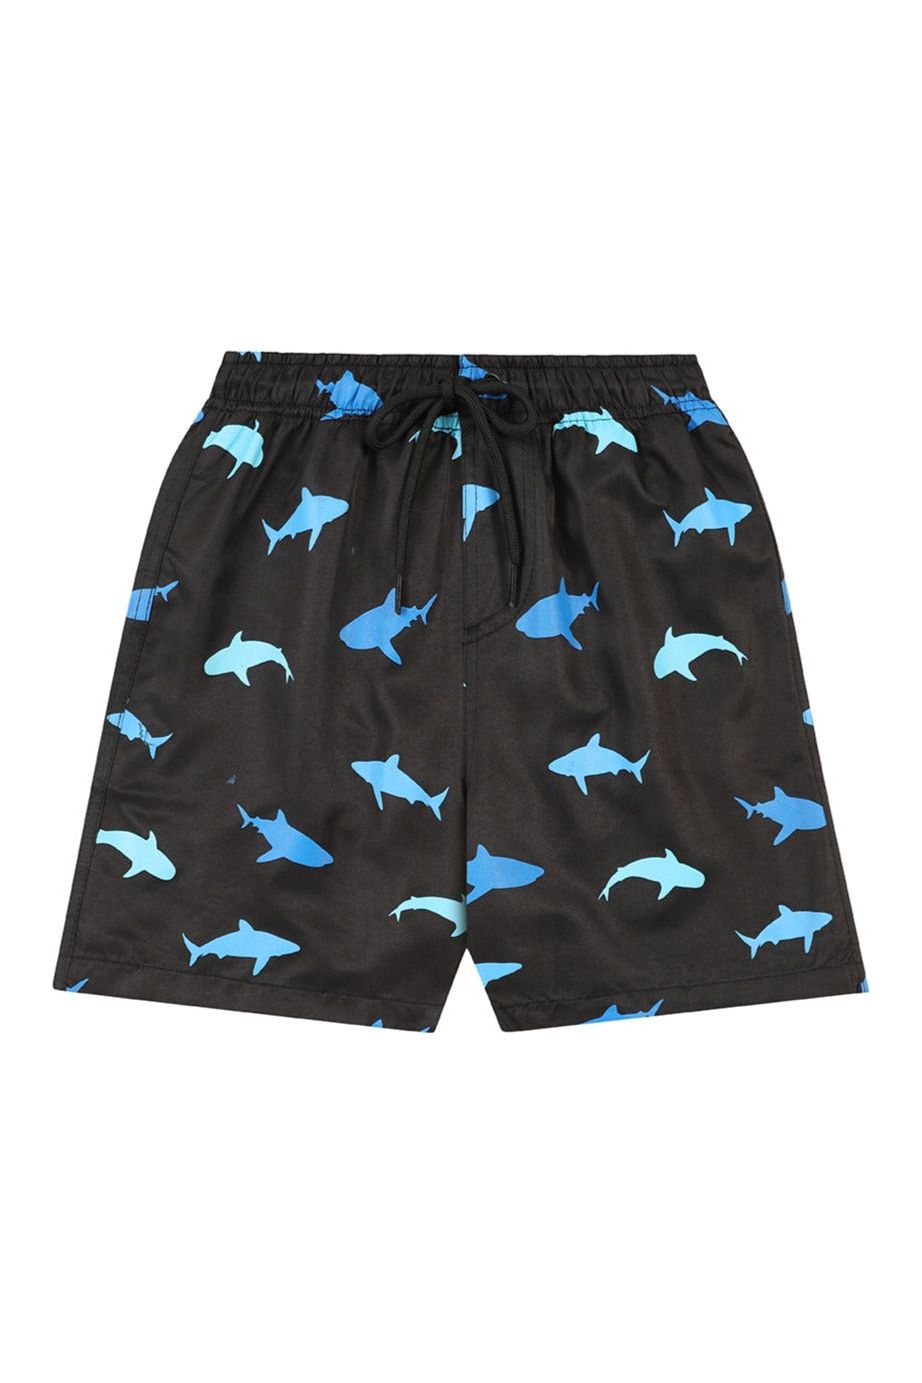 Men's Shark Swimming Trunks, Swim Shorts with All Over Print